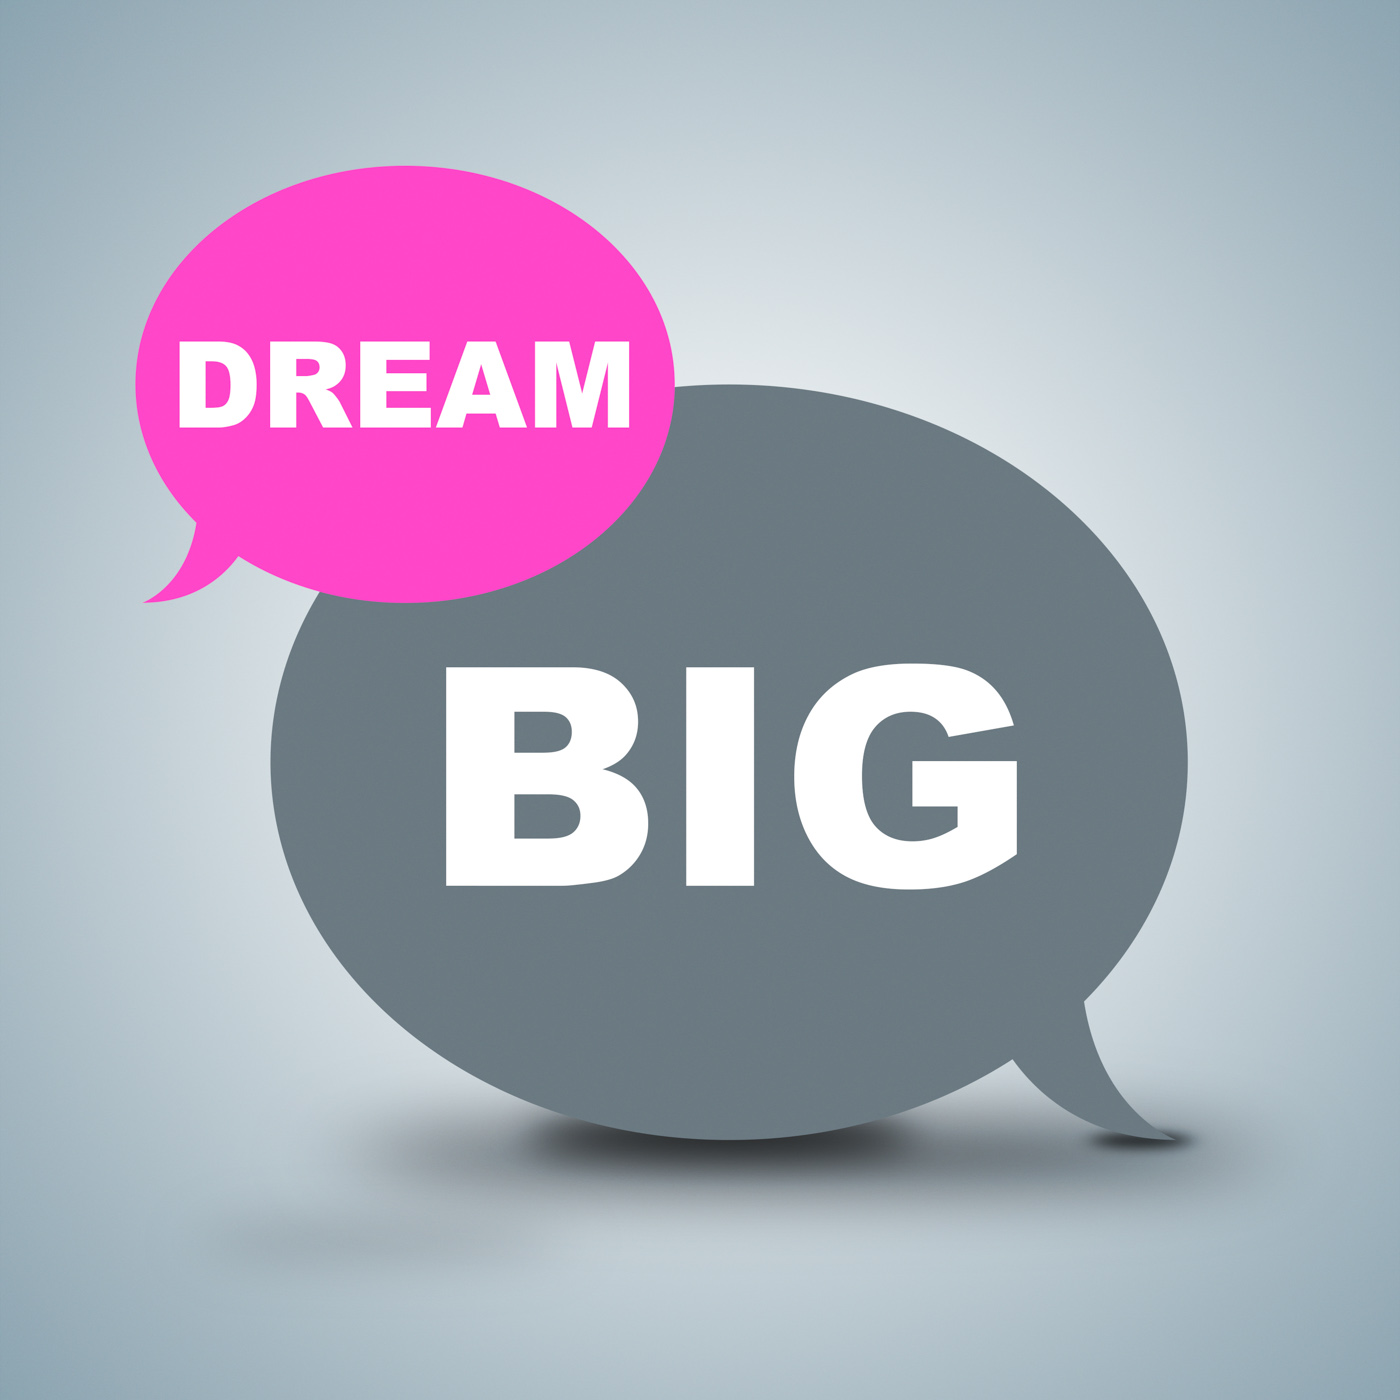 Dream big shows dreamer vision and aspiration photo